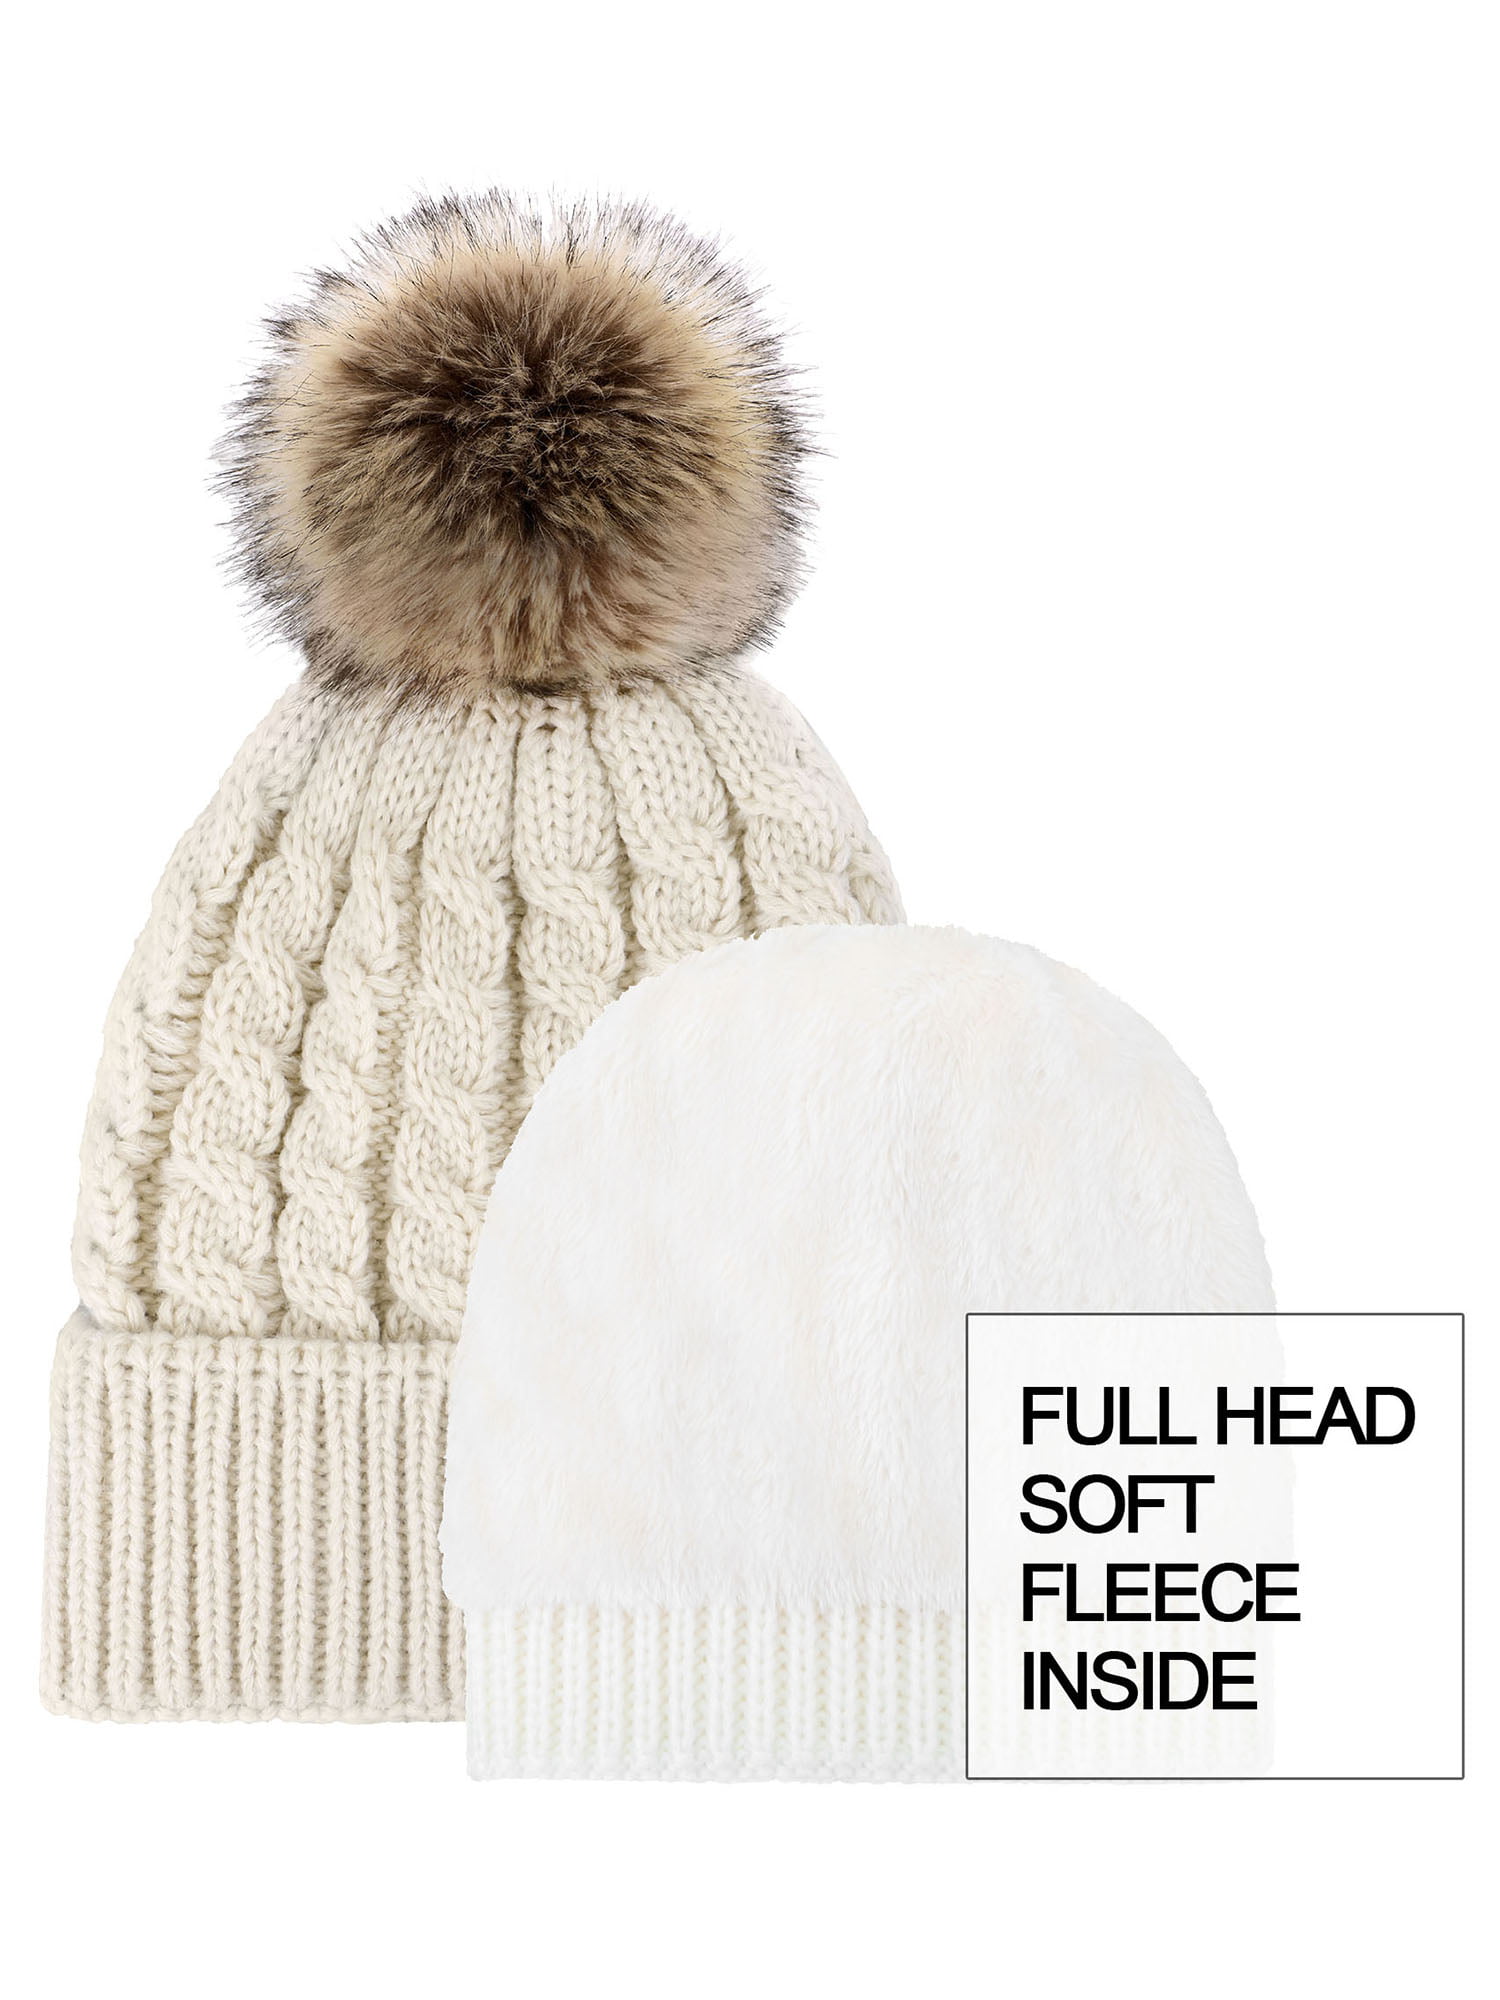 Beanie Hat for Women Winter Soft Fleece Lined Knit Pom Beanie, Grey